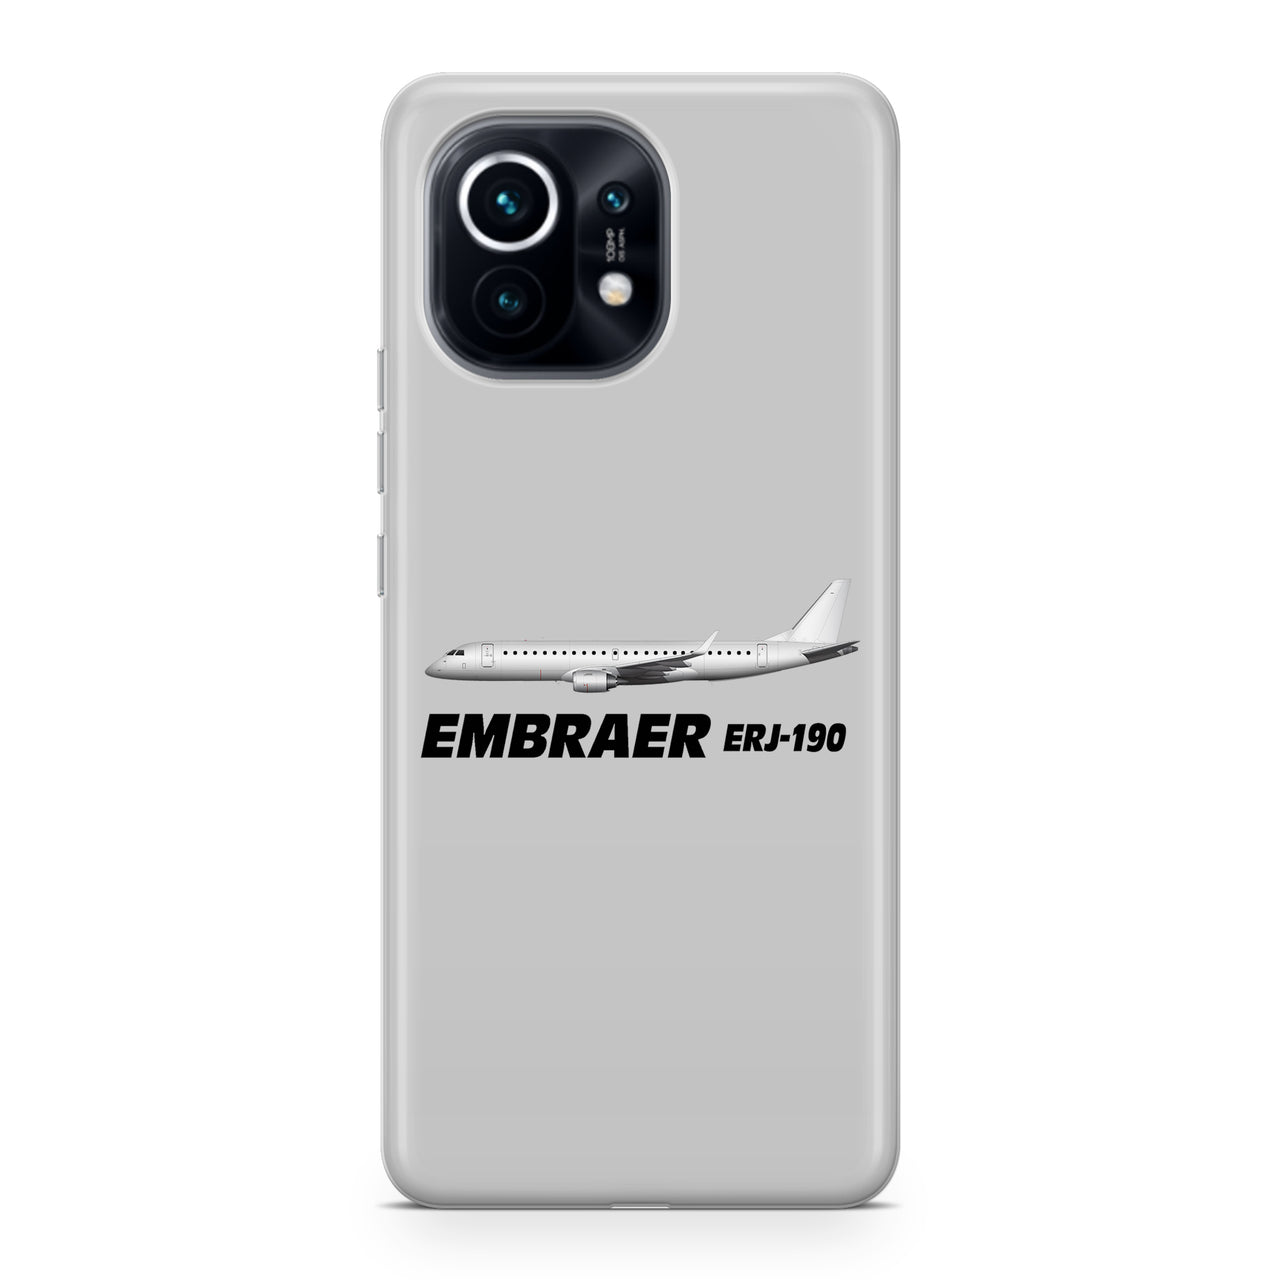 The Embraer ERJ-190 Designed Xiaomi Cases